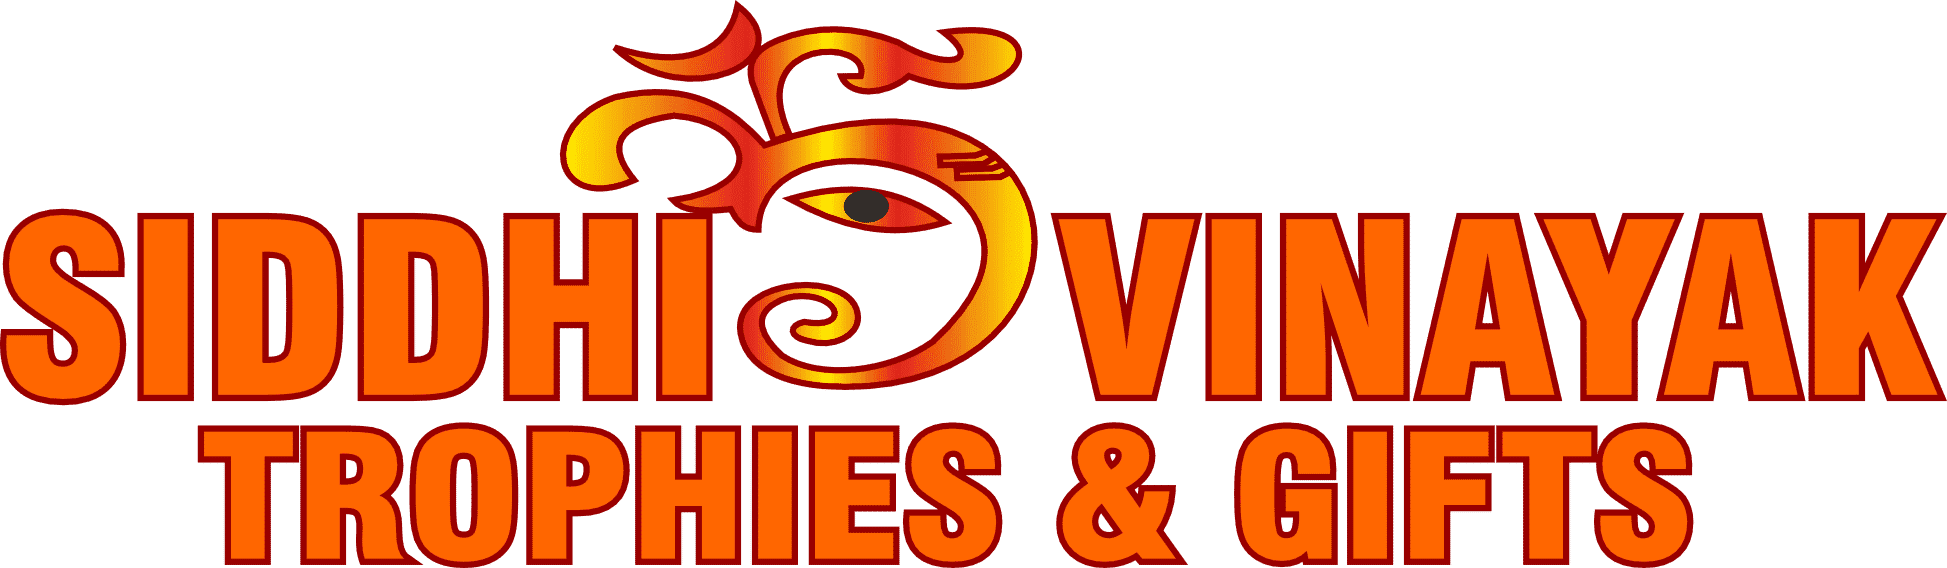 Siddhivinayak Trophies & Gifts